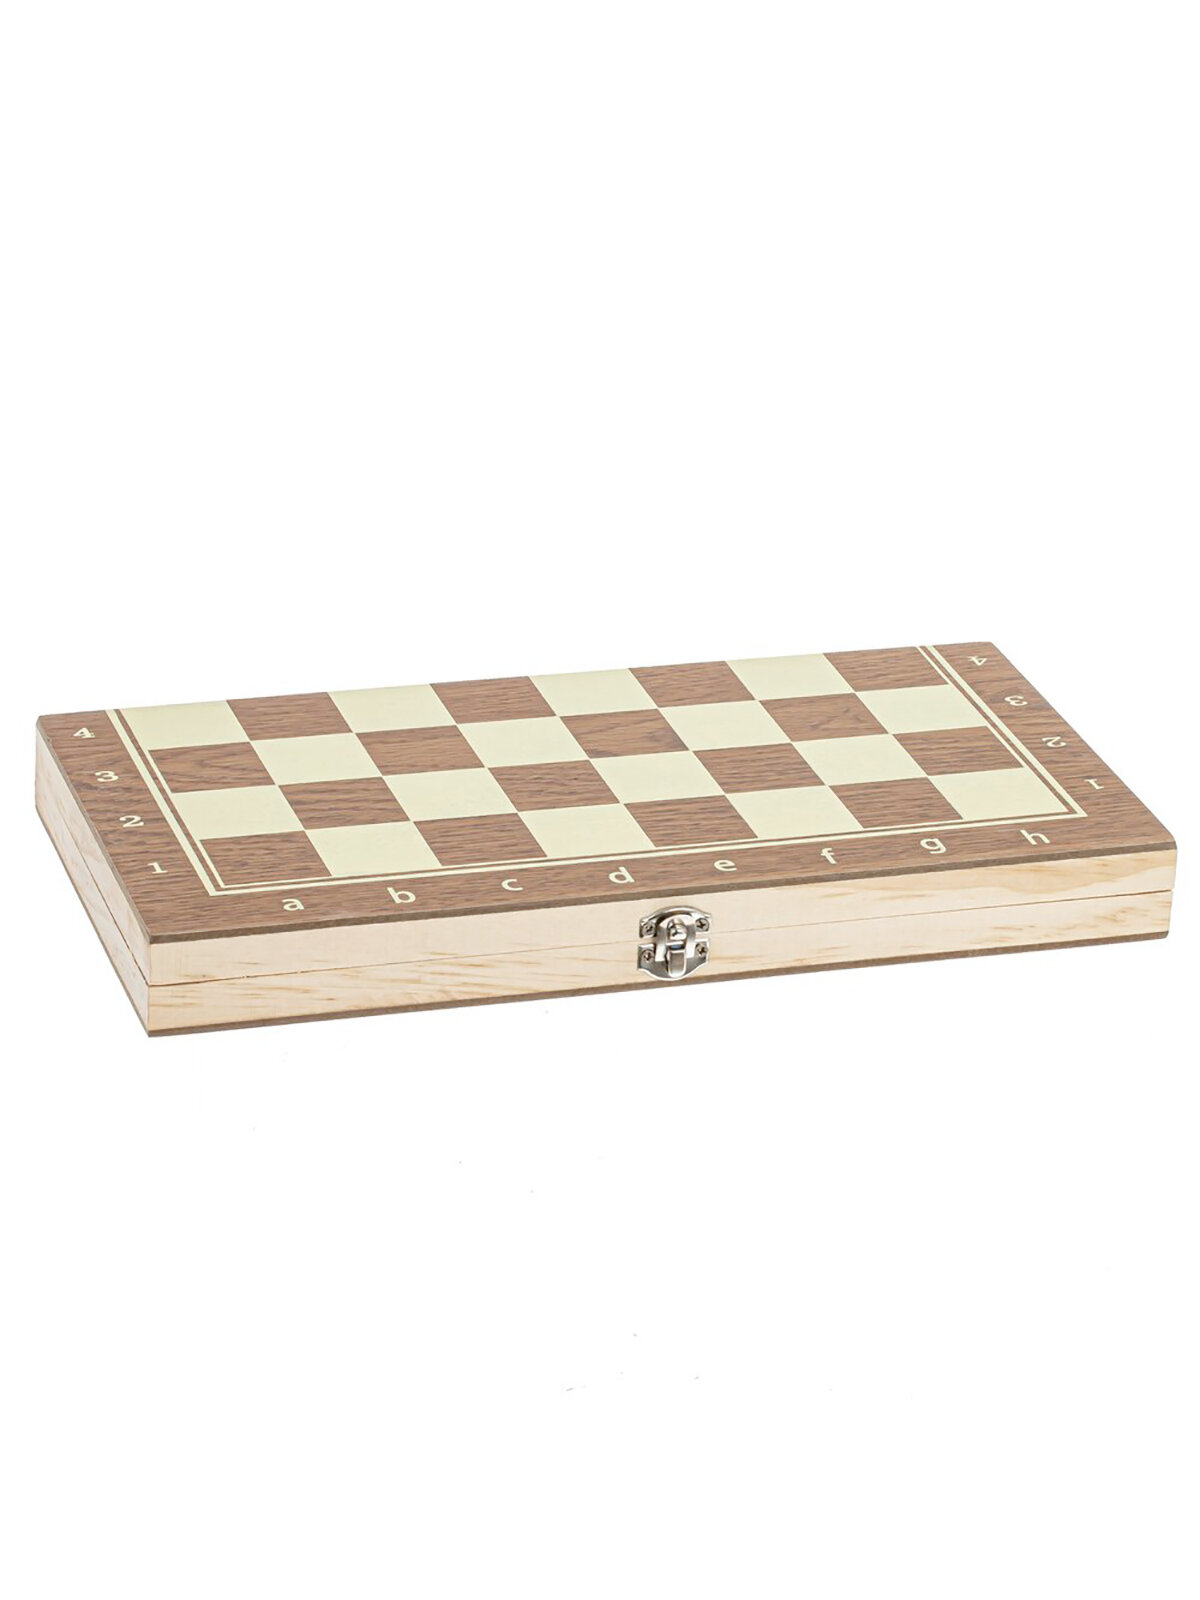 Шахматы шашки нарды 3 в 1 Remecoclub деревянные 29x14,5x3 см